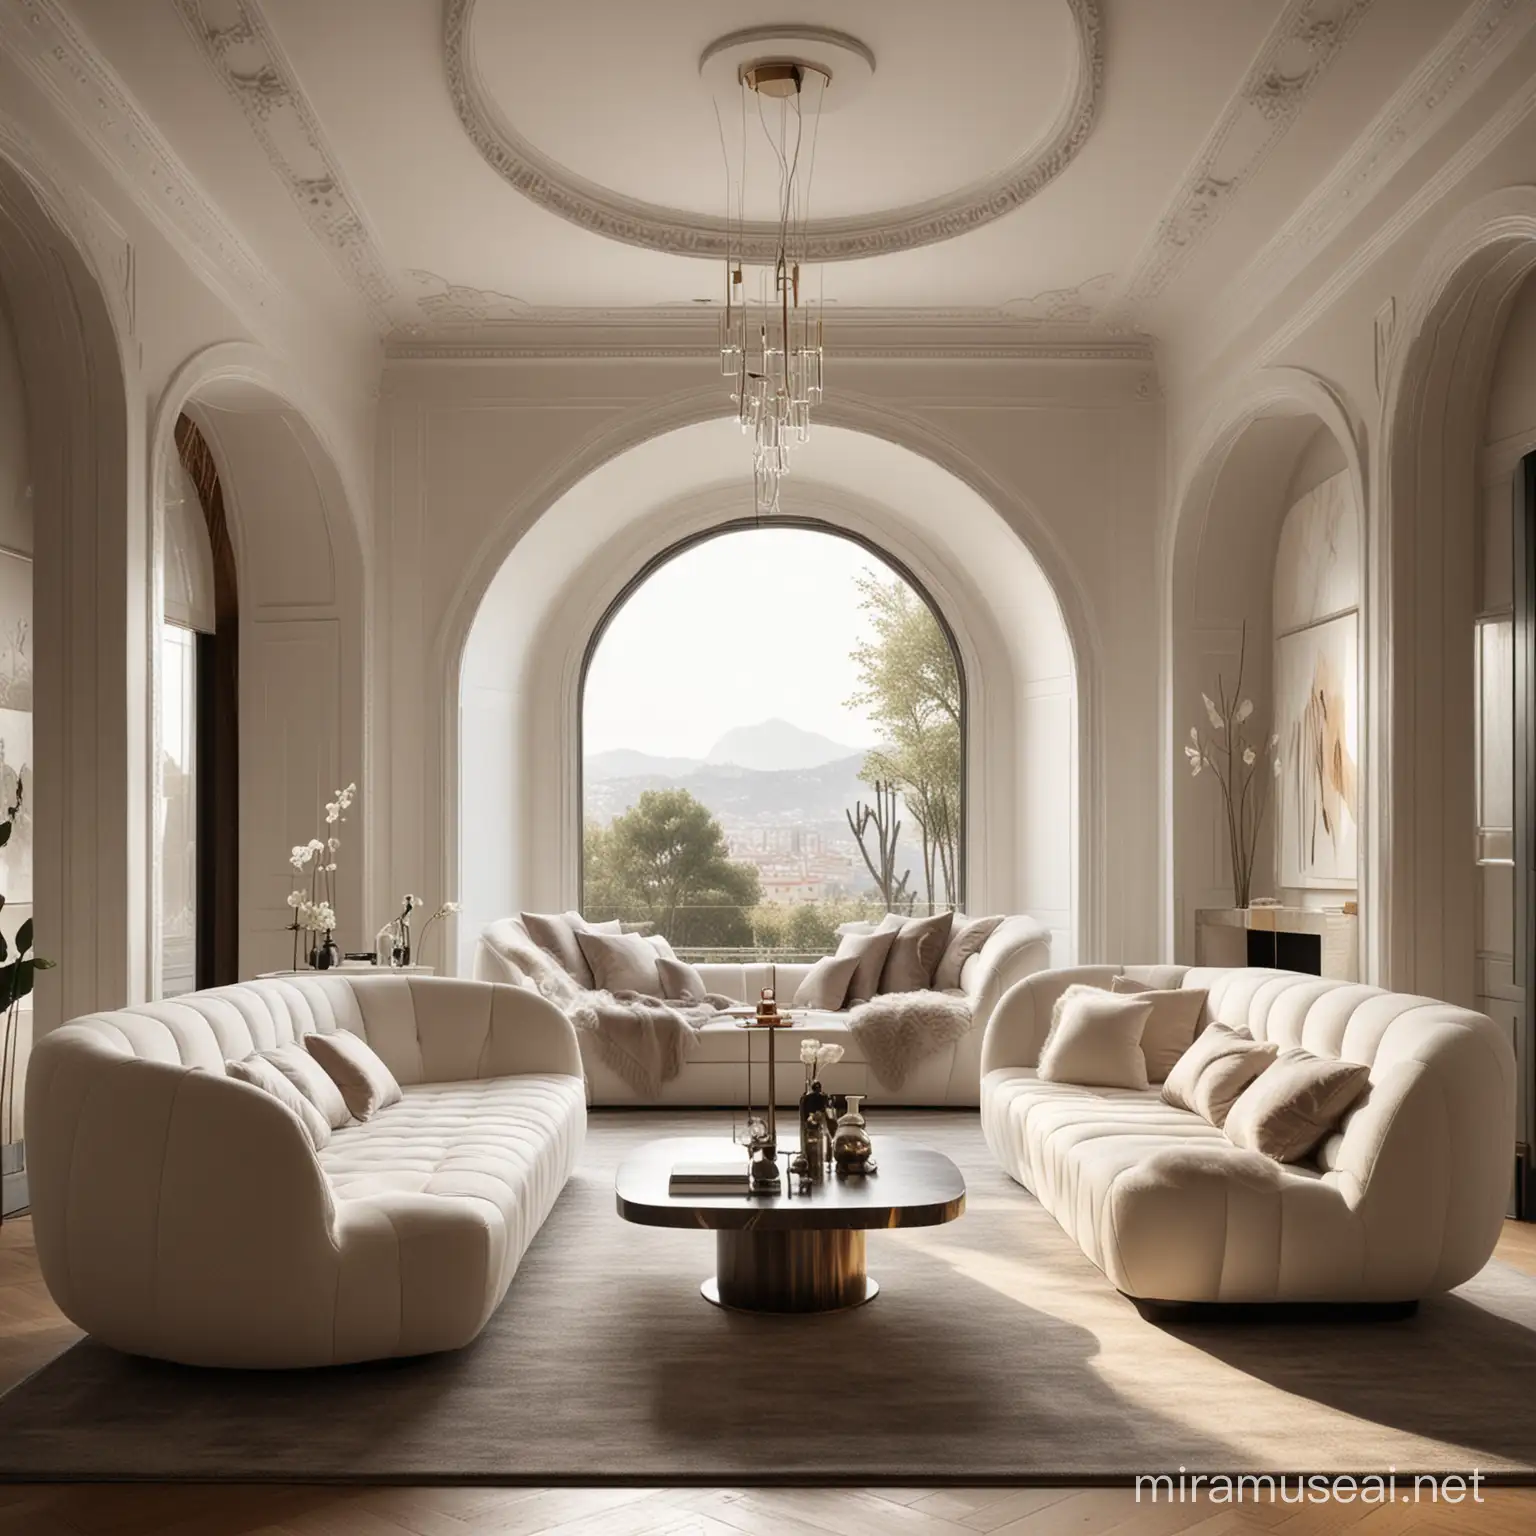 Elegant Sofa Design in a Luxurious Interior with Futuristic Touch